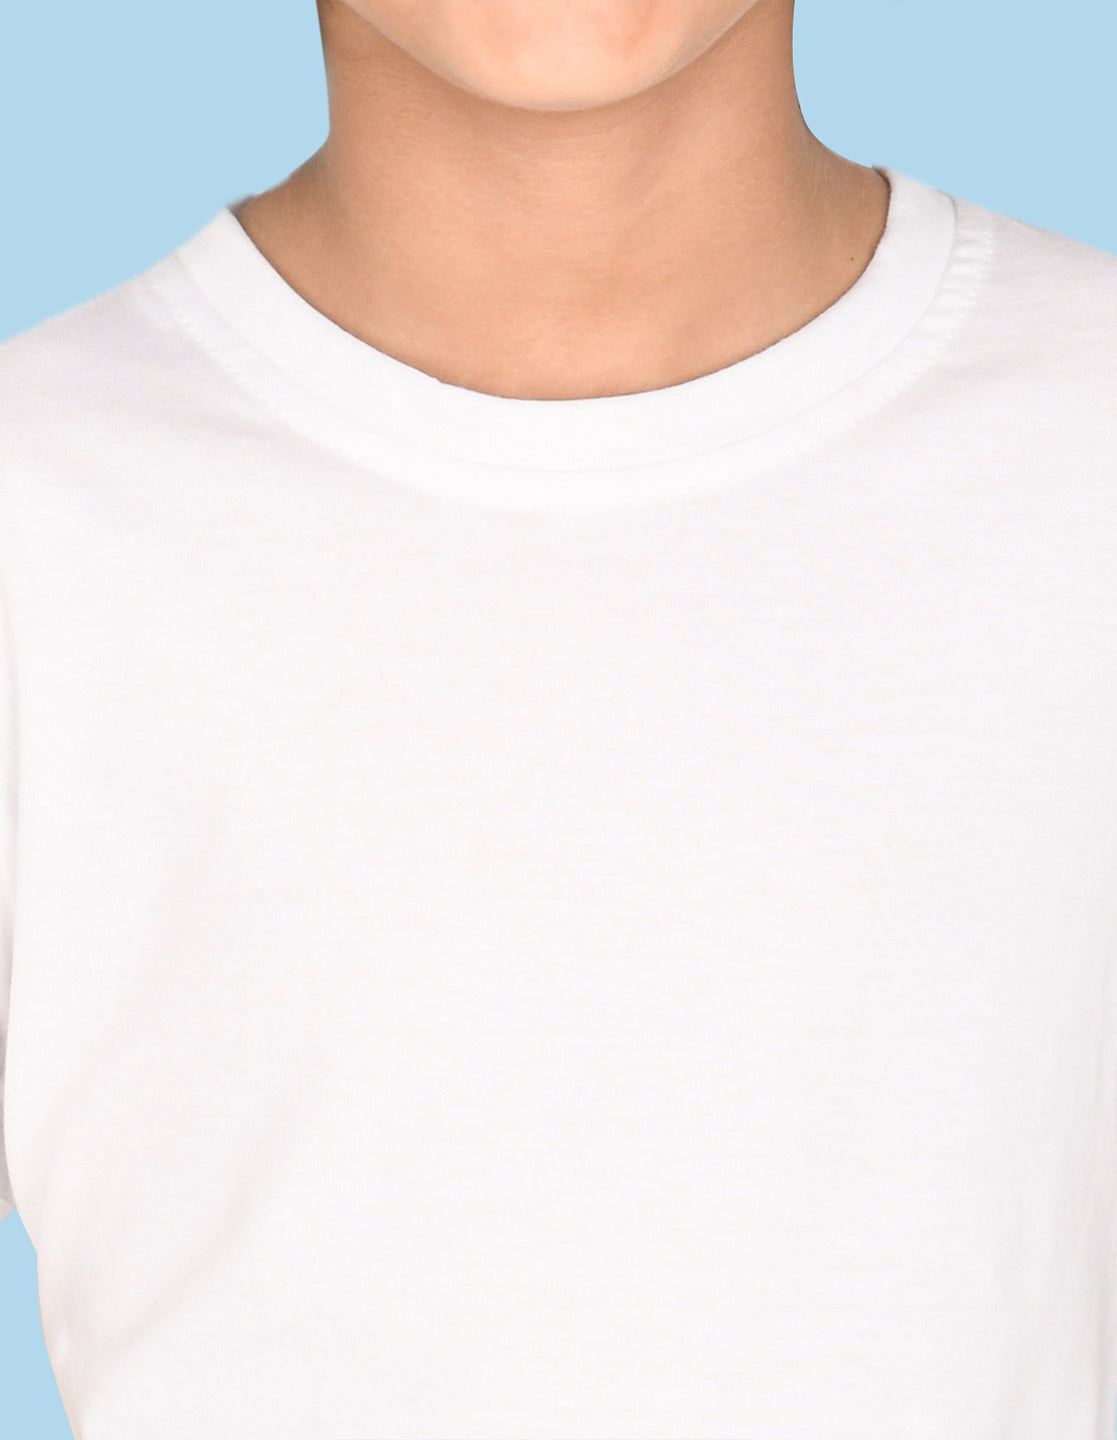 NUSYL Boys White Bio Washed Cotton Short Sleeve Solid T-shirt